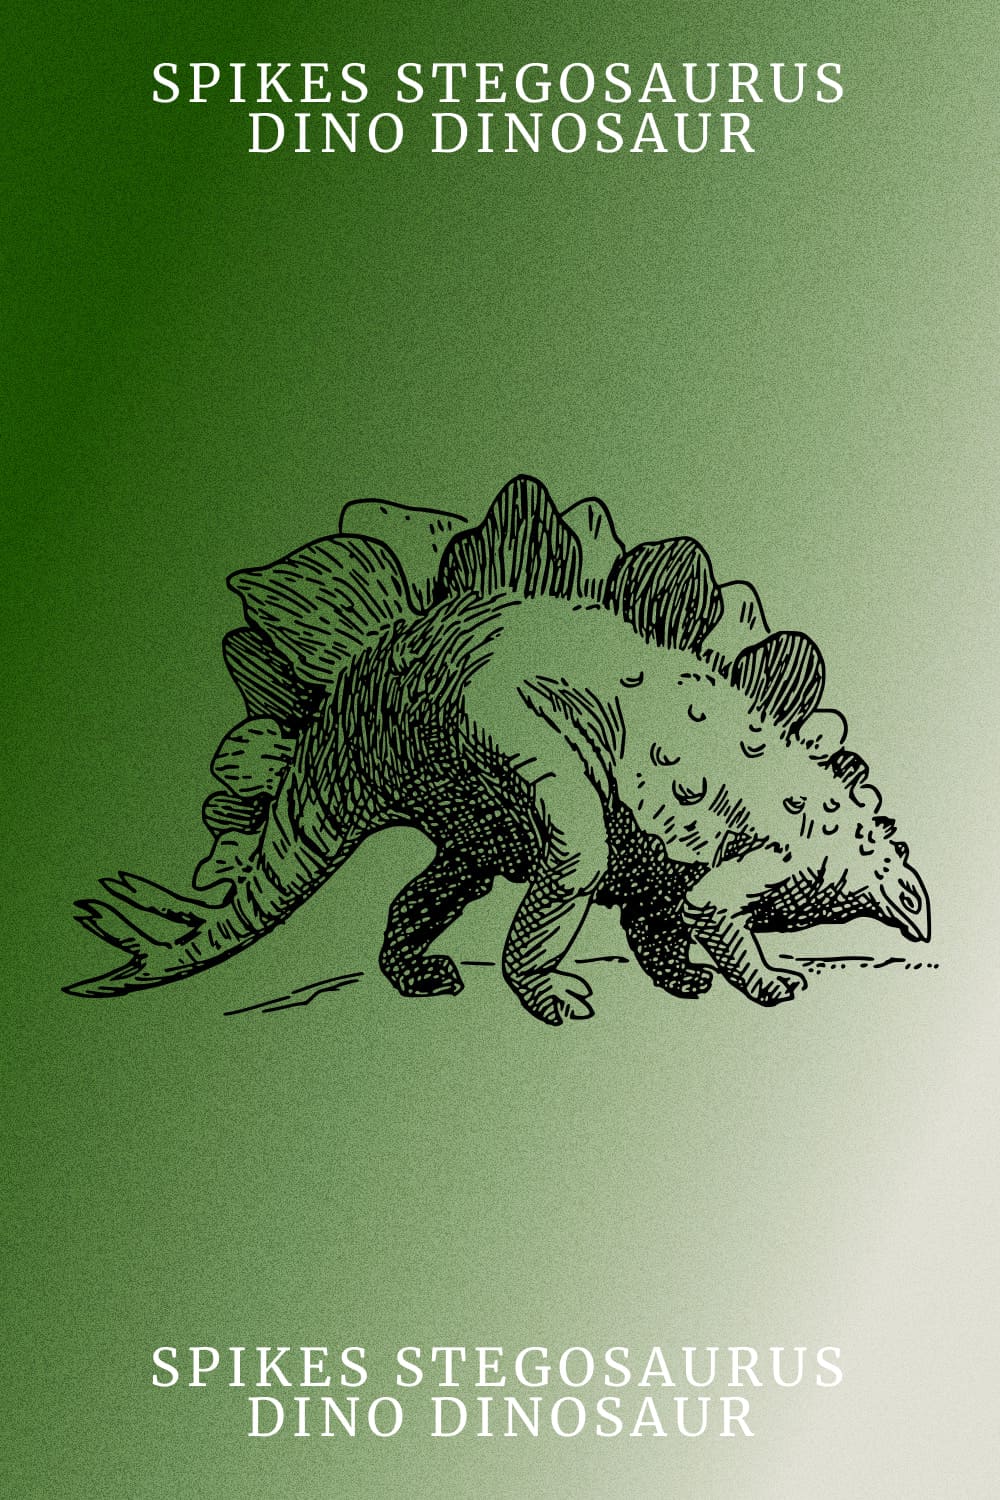 Spikes Stegosaurus Dino Dinosaur - Pinterest Image.